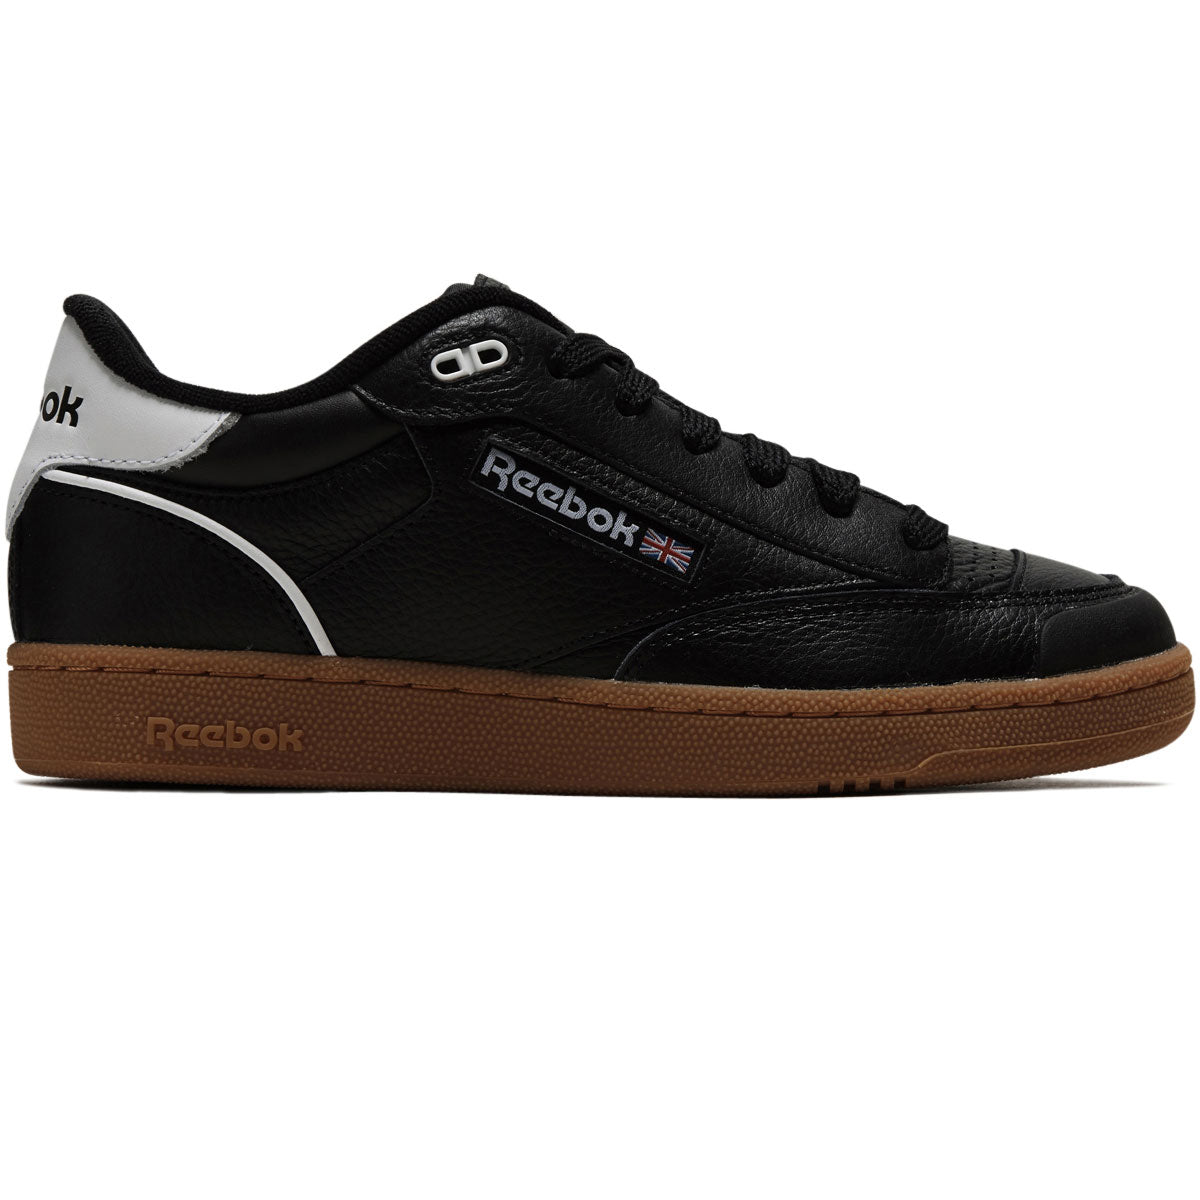 REEBOK Club C Bulc Footwear White / Black / RBK Rubber Gum Leather Sneaker  shoes